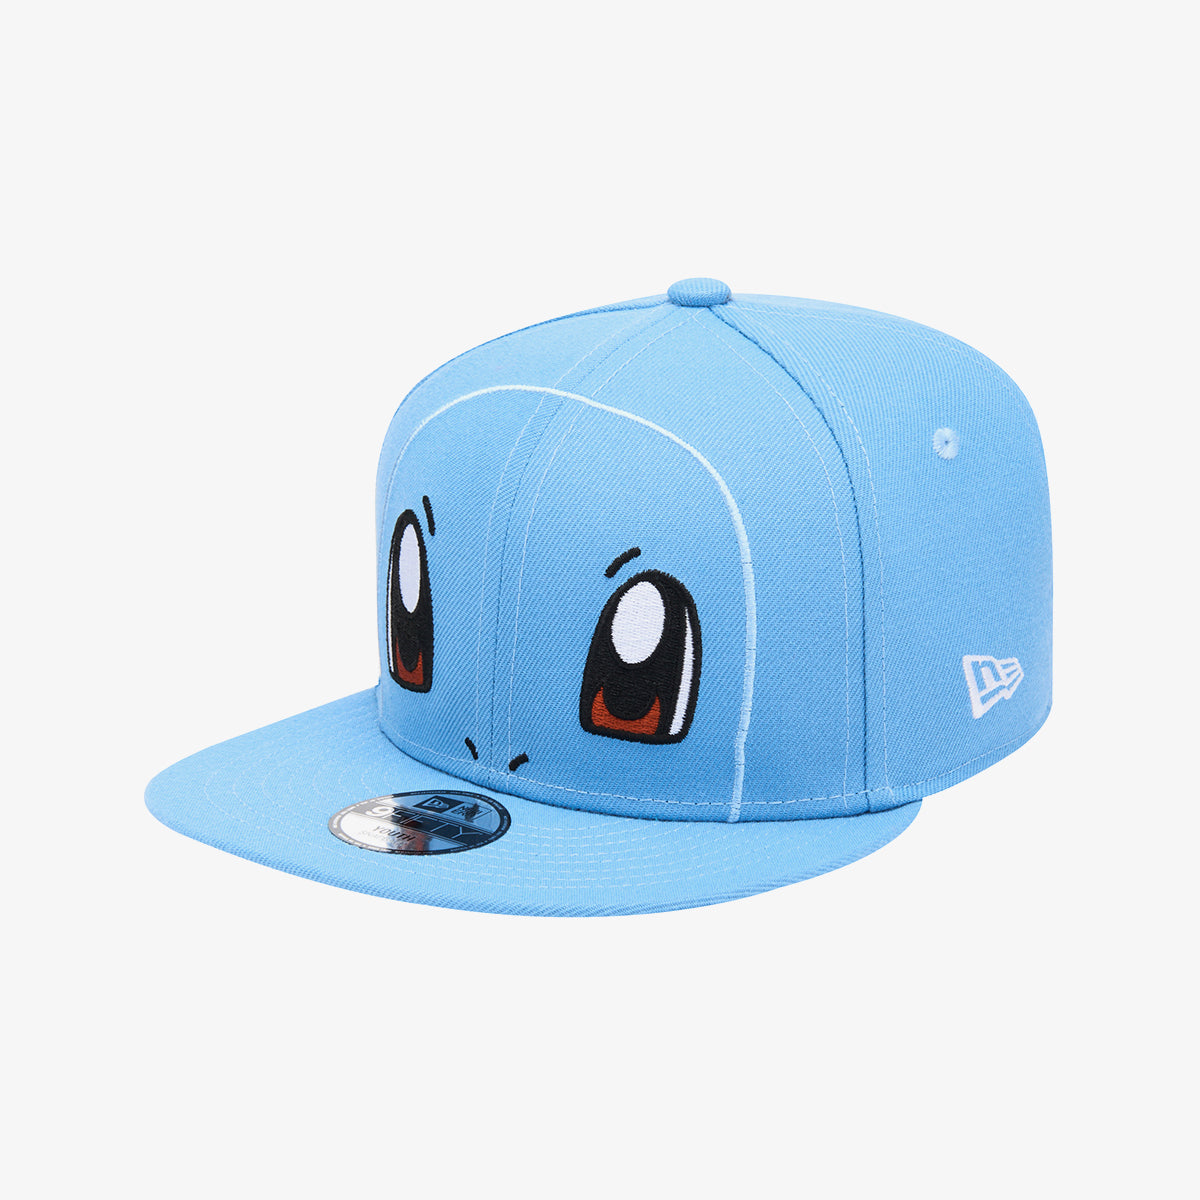 Pokemon Ash Hat Buy Pokemon Ash Hat With Free Shipping On Aliexpress